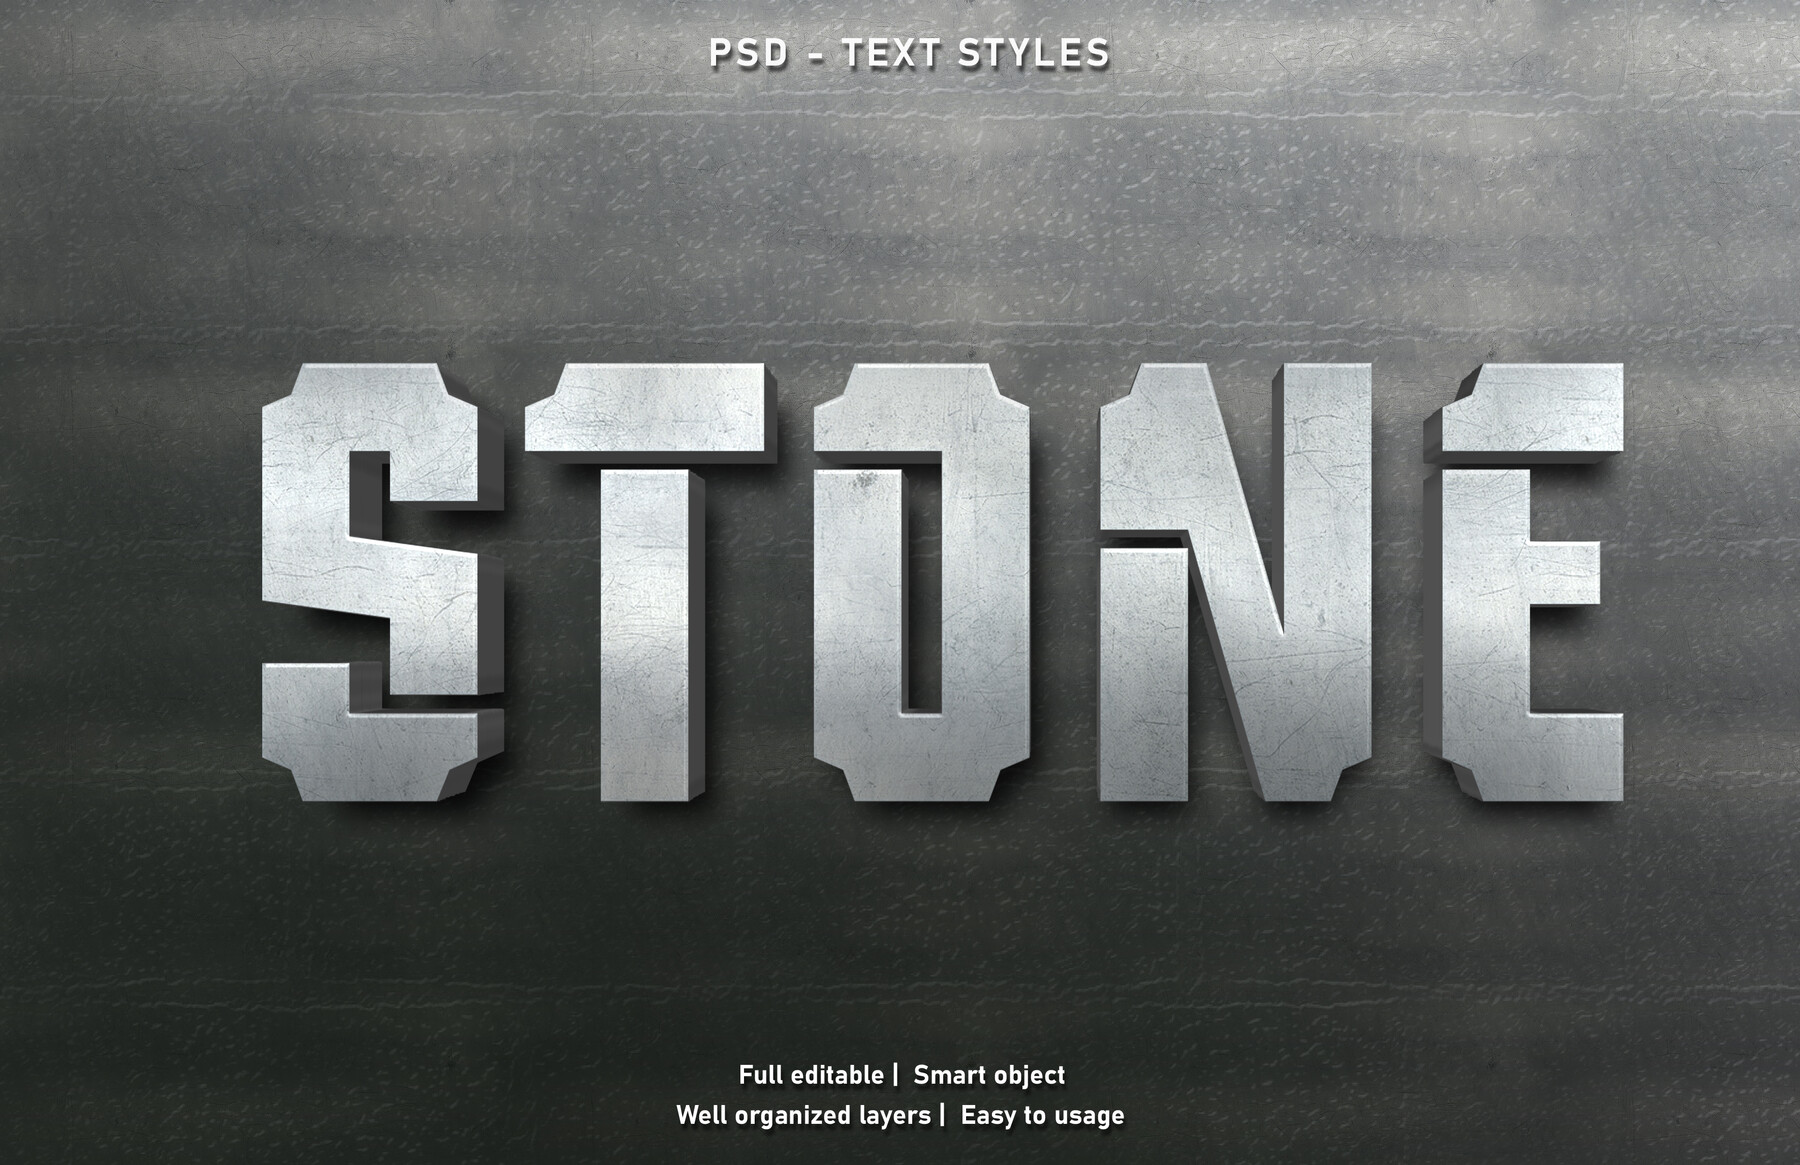 Text stone